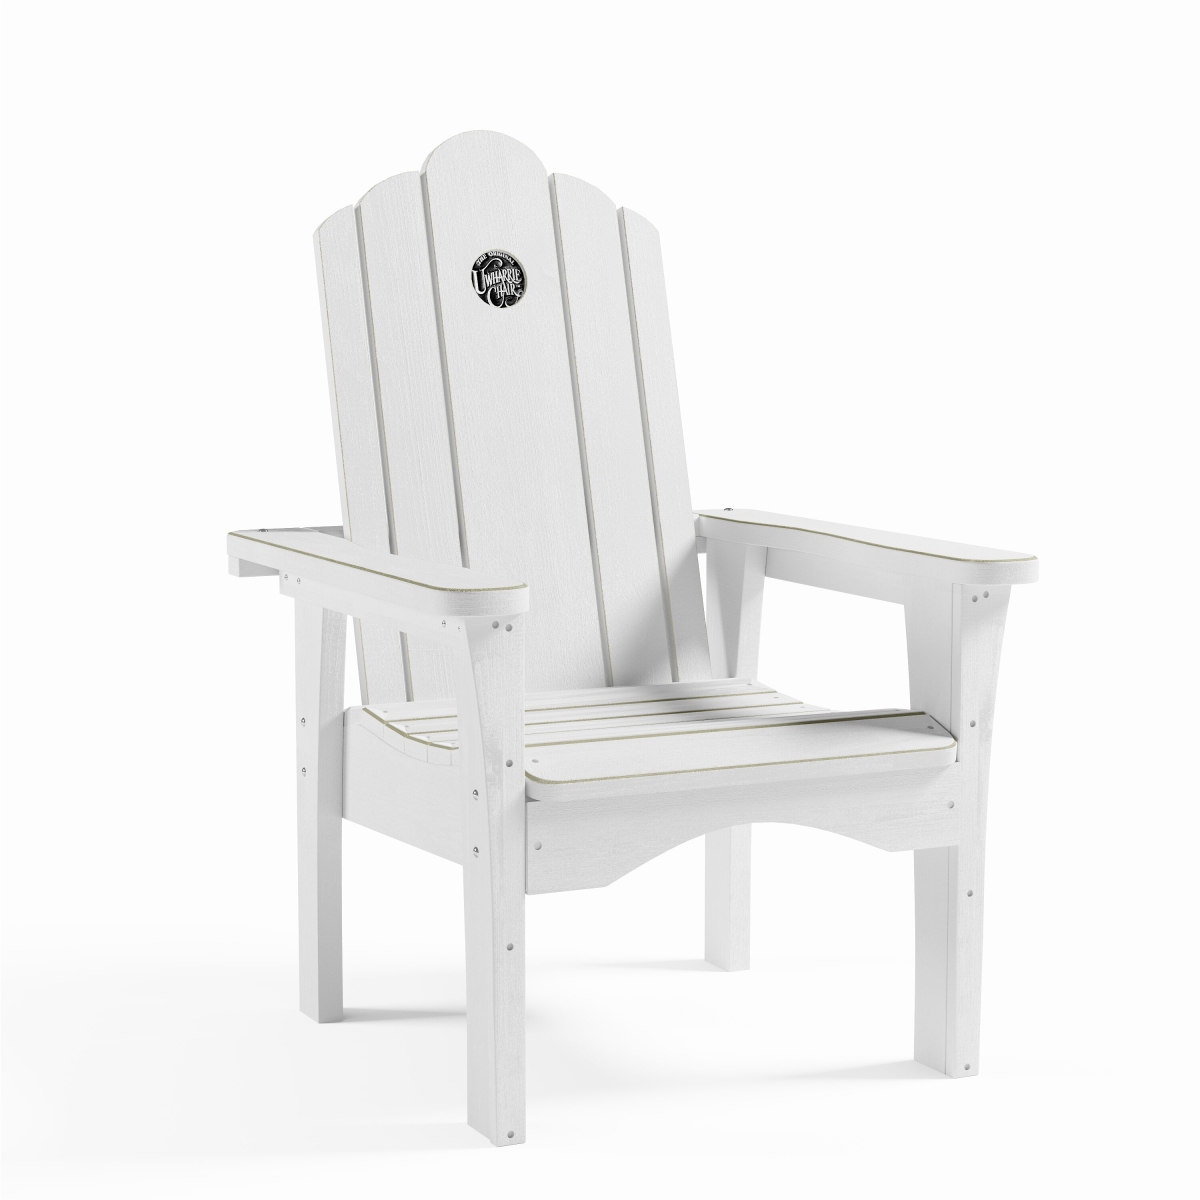 S114-089 Original Wood Lounge Chair, Black Pine - 30.5 X 33.5 X 43.5 In.